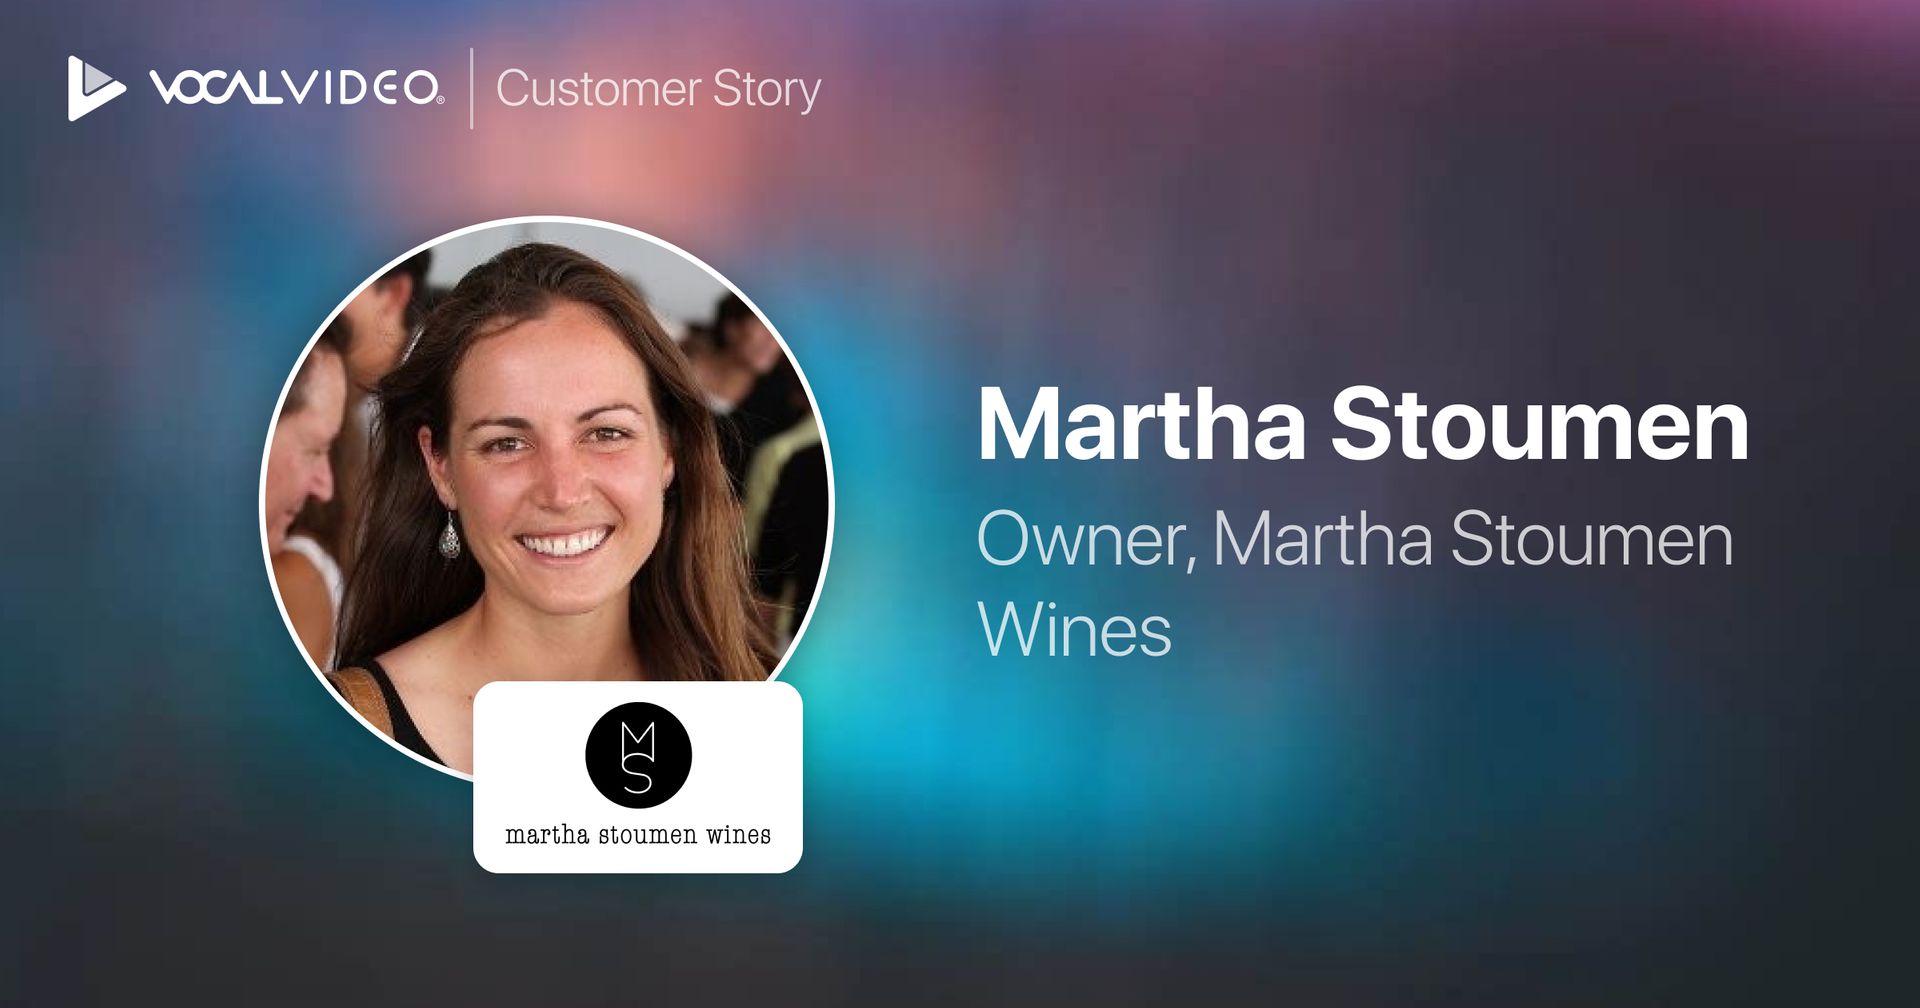 Martha Stoumen Wines: Connecting with Community through Testimonial Videos